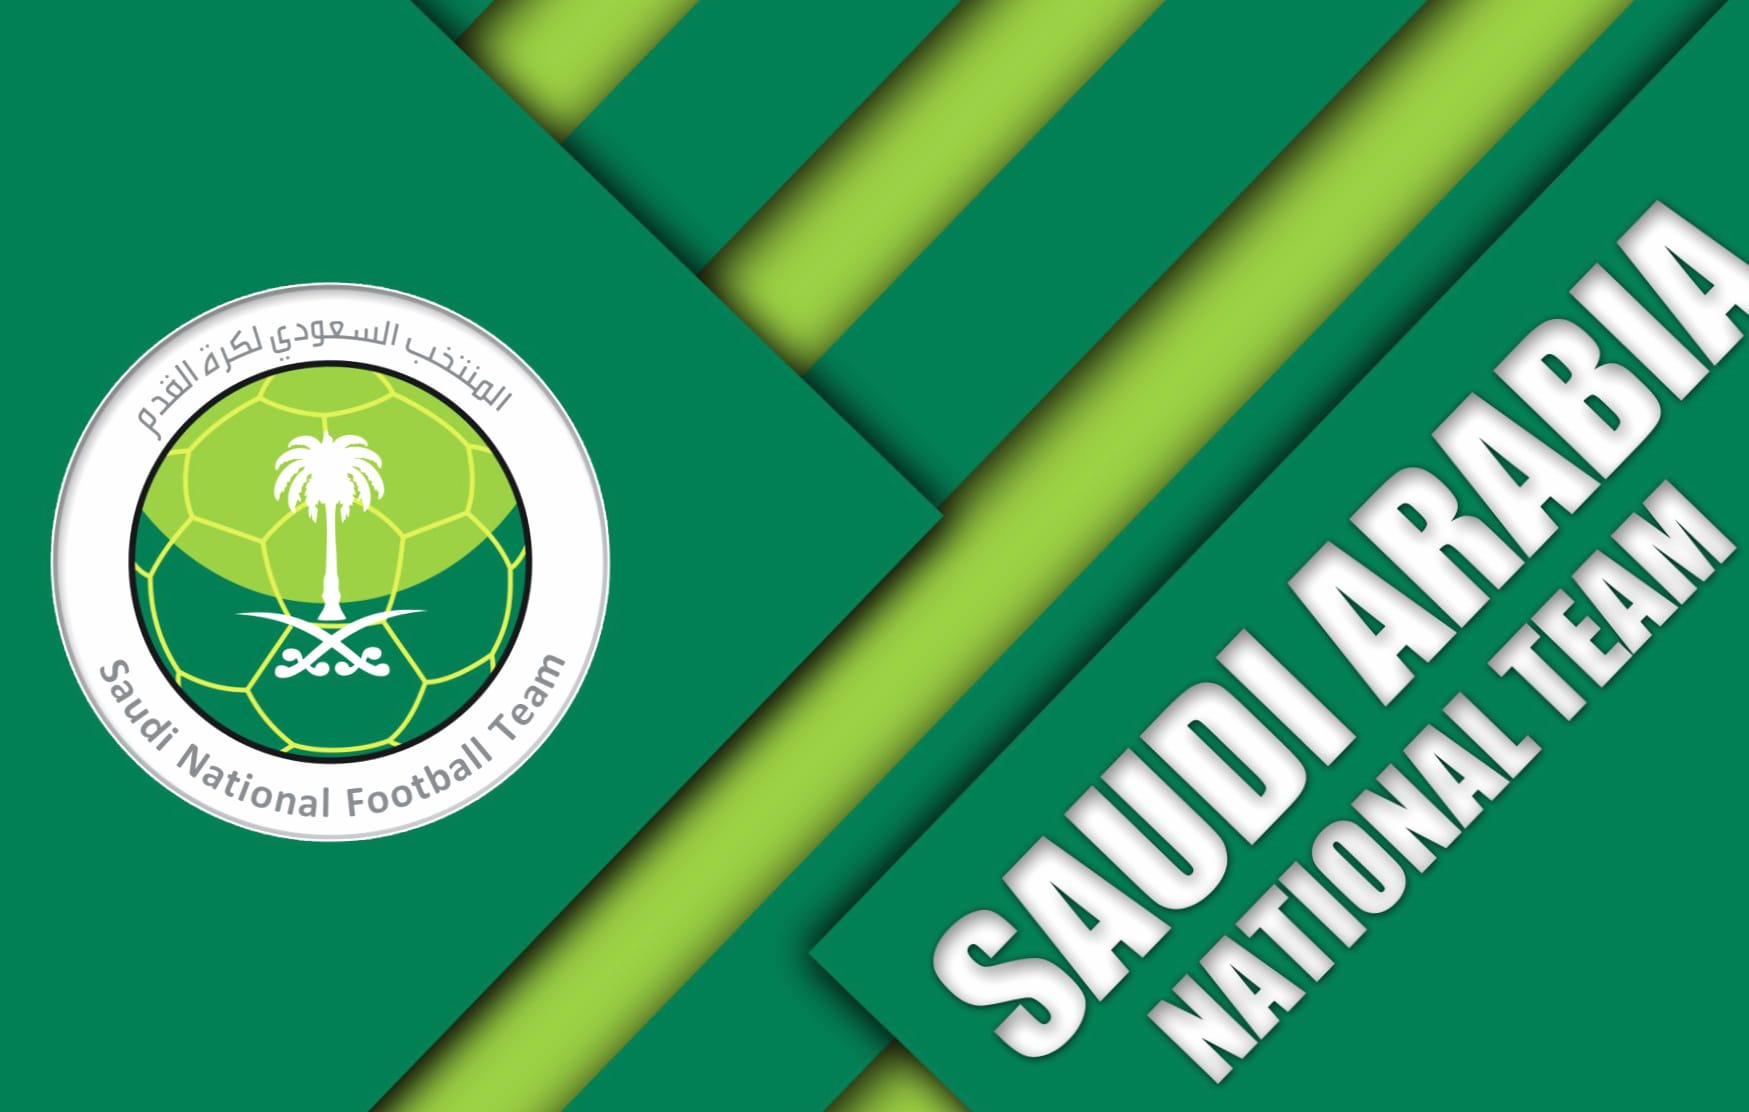 Saudi Arabia National Football Team at 2048 x 2048 iPad size wallpapers HD quality